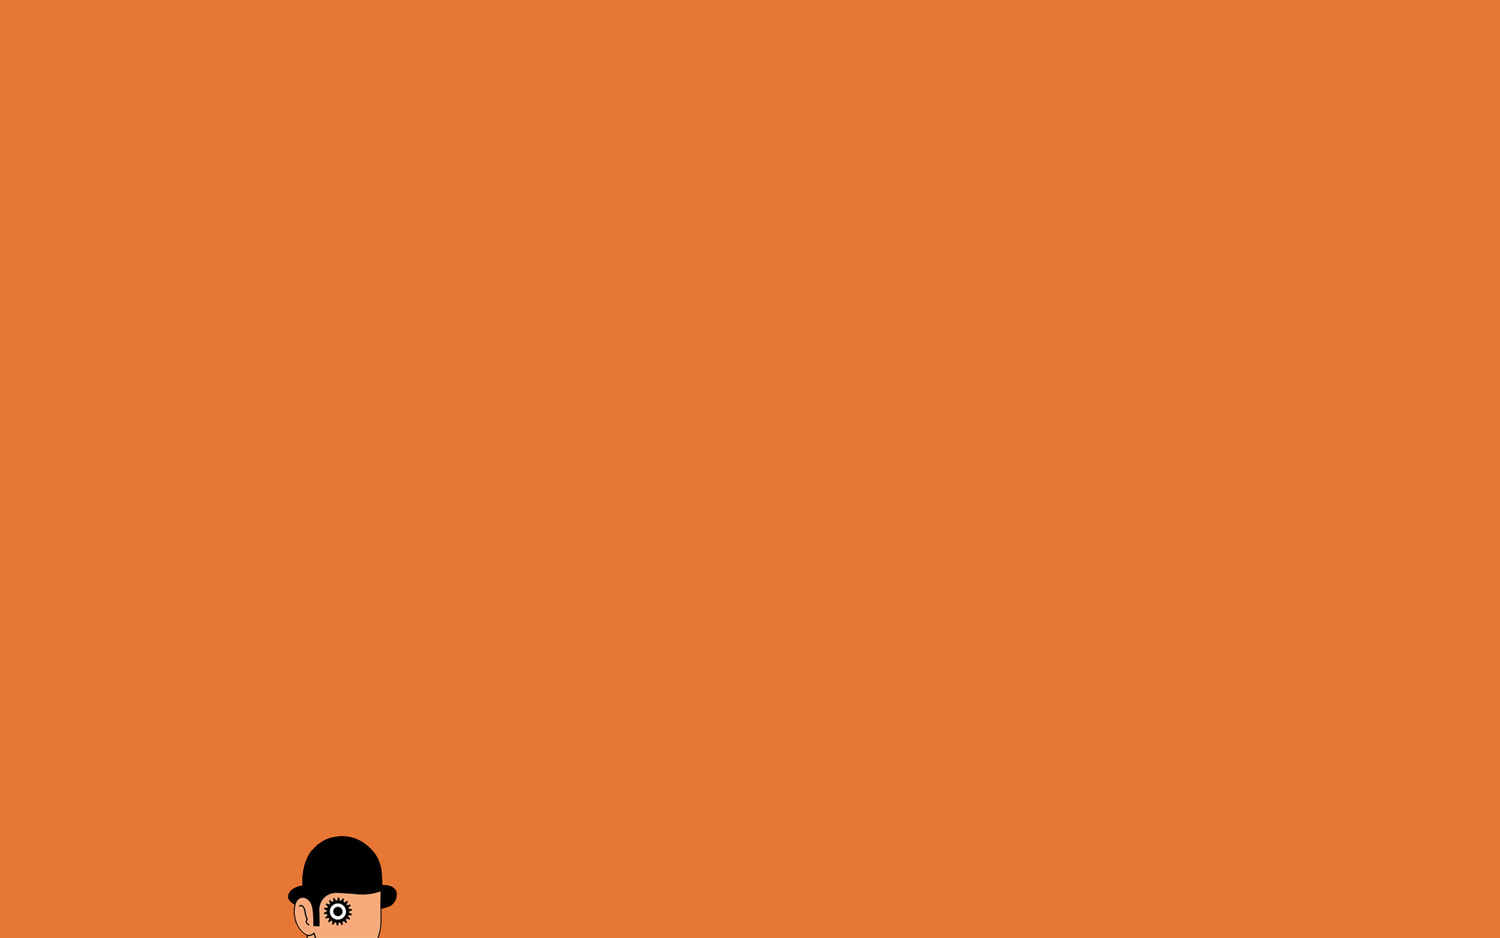 Minimalist Orange Wallpaper Free .wallpaperaccess.com